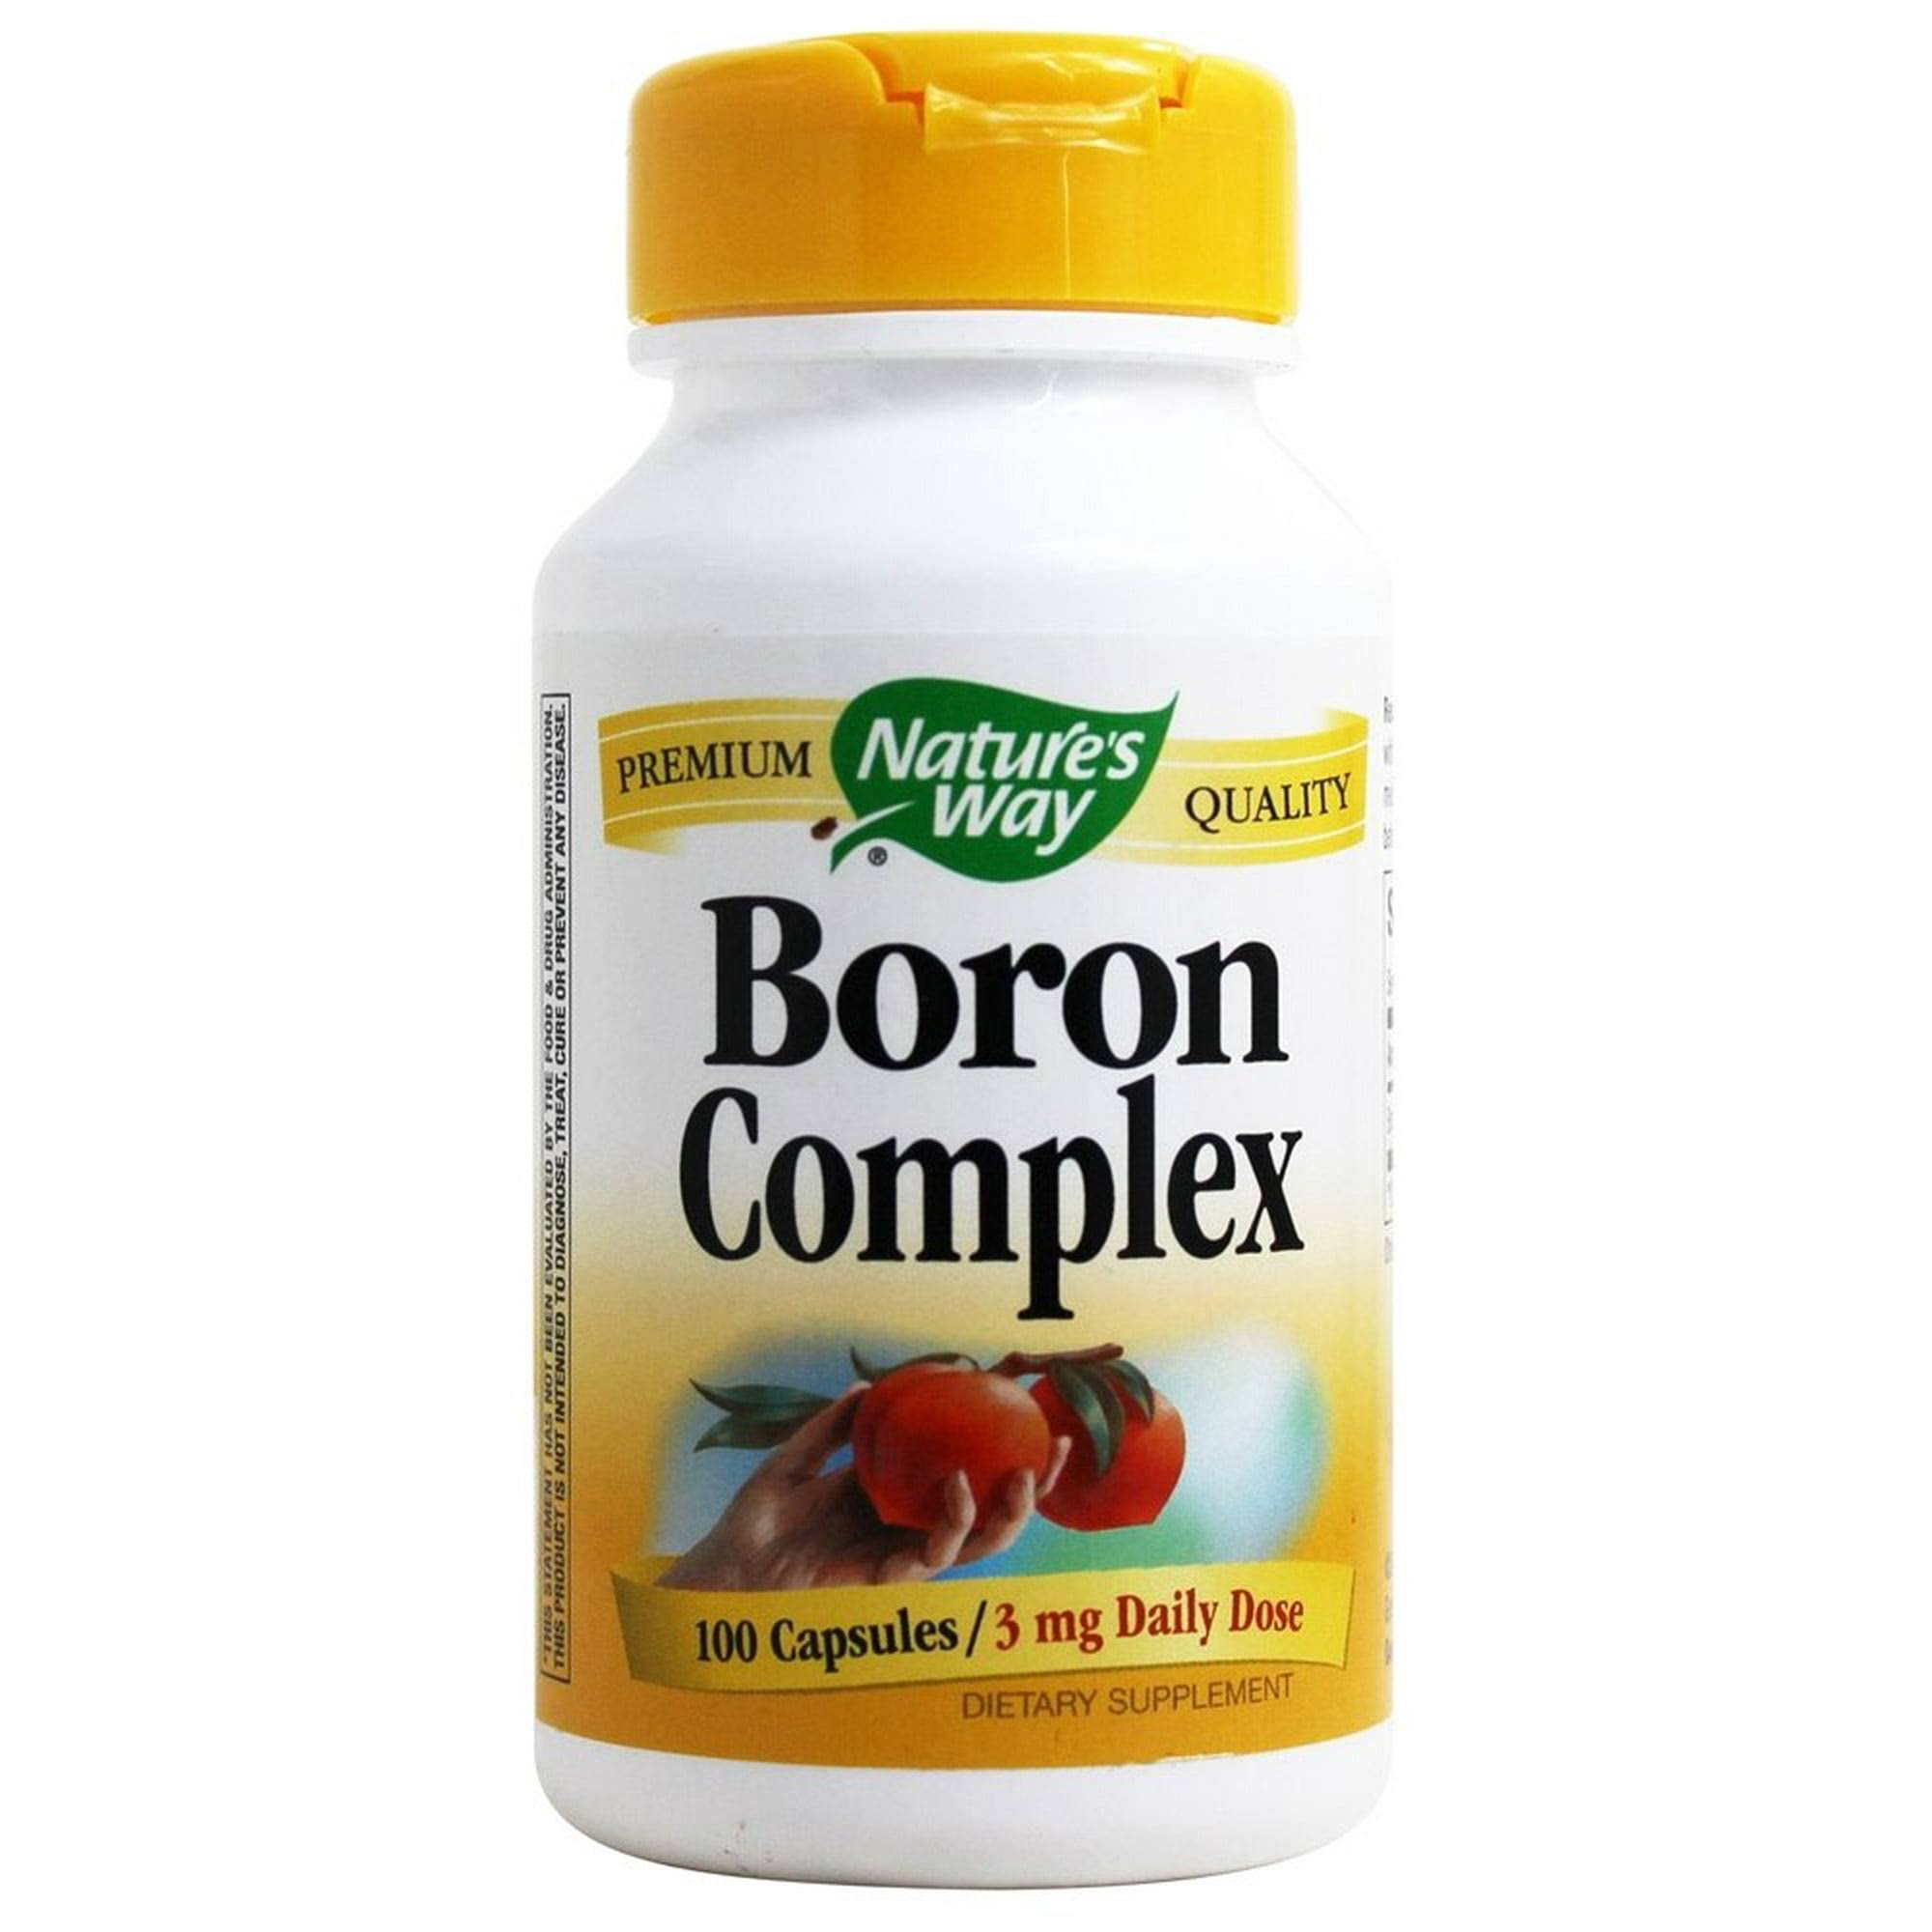 Nature's Way Boron Complex Supplement - 100 Capsules